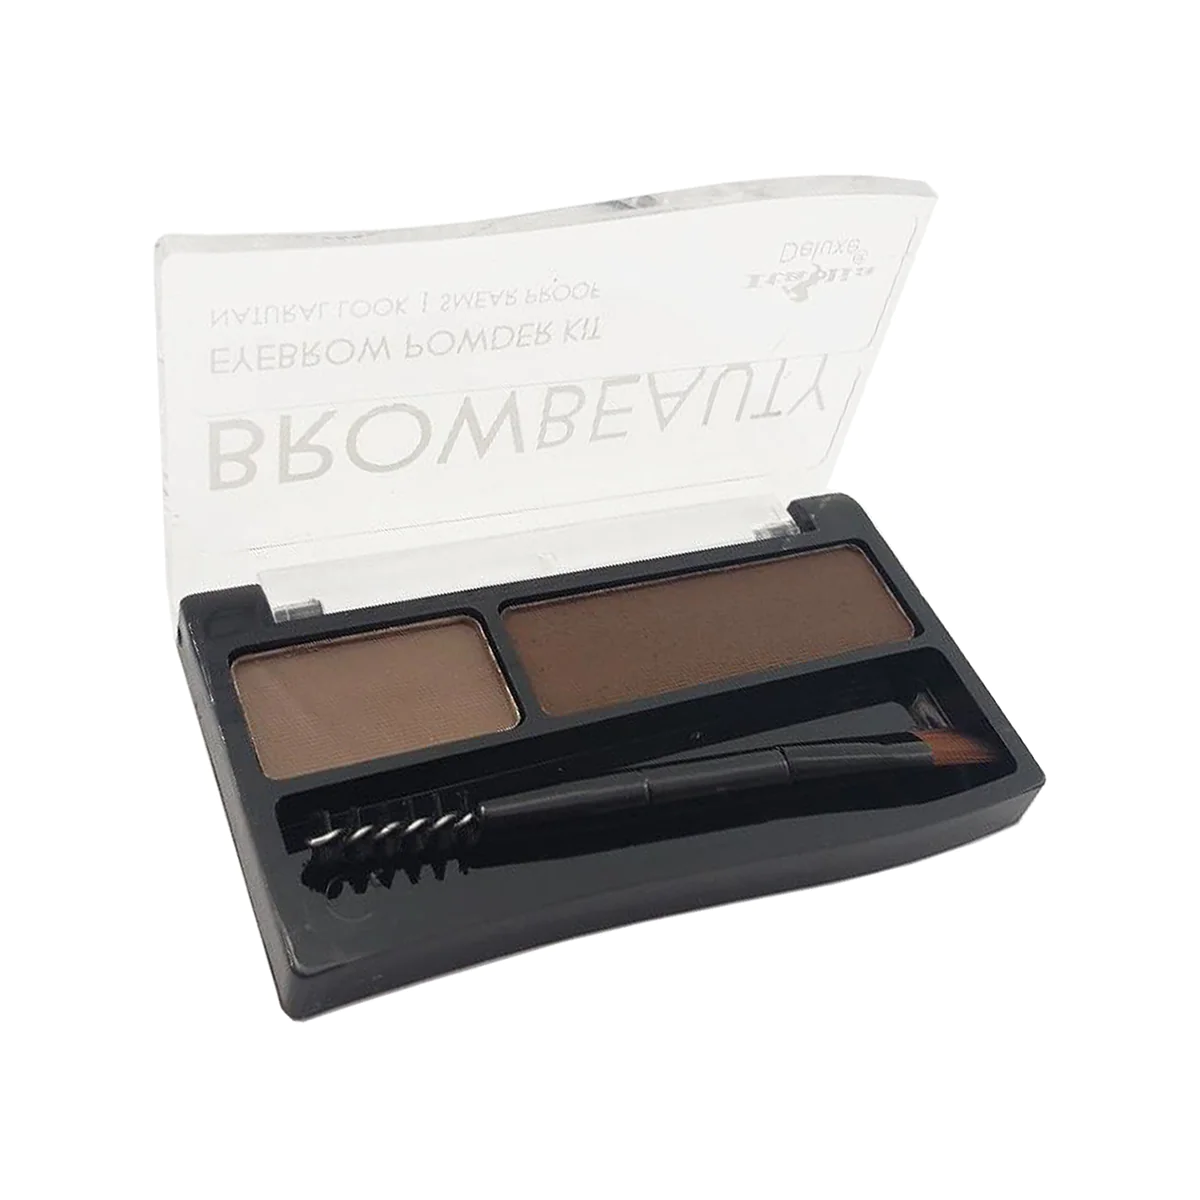 BrowBeauty Eyebrow Powder Kit Regular price$2.99